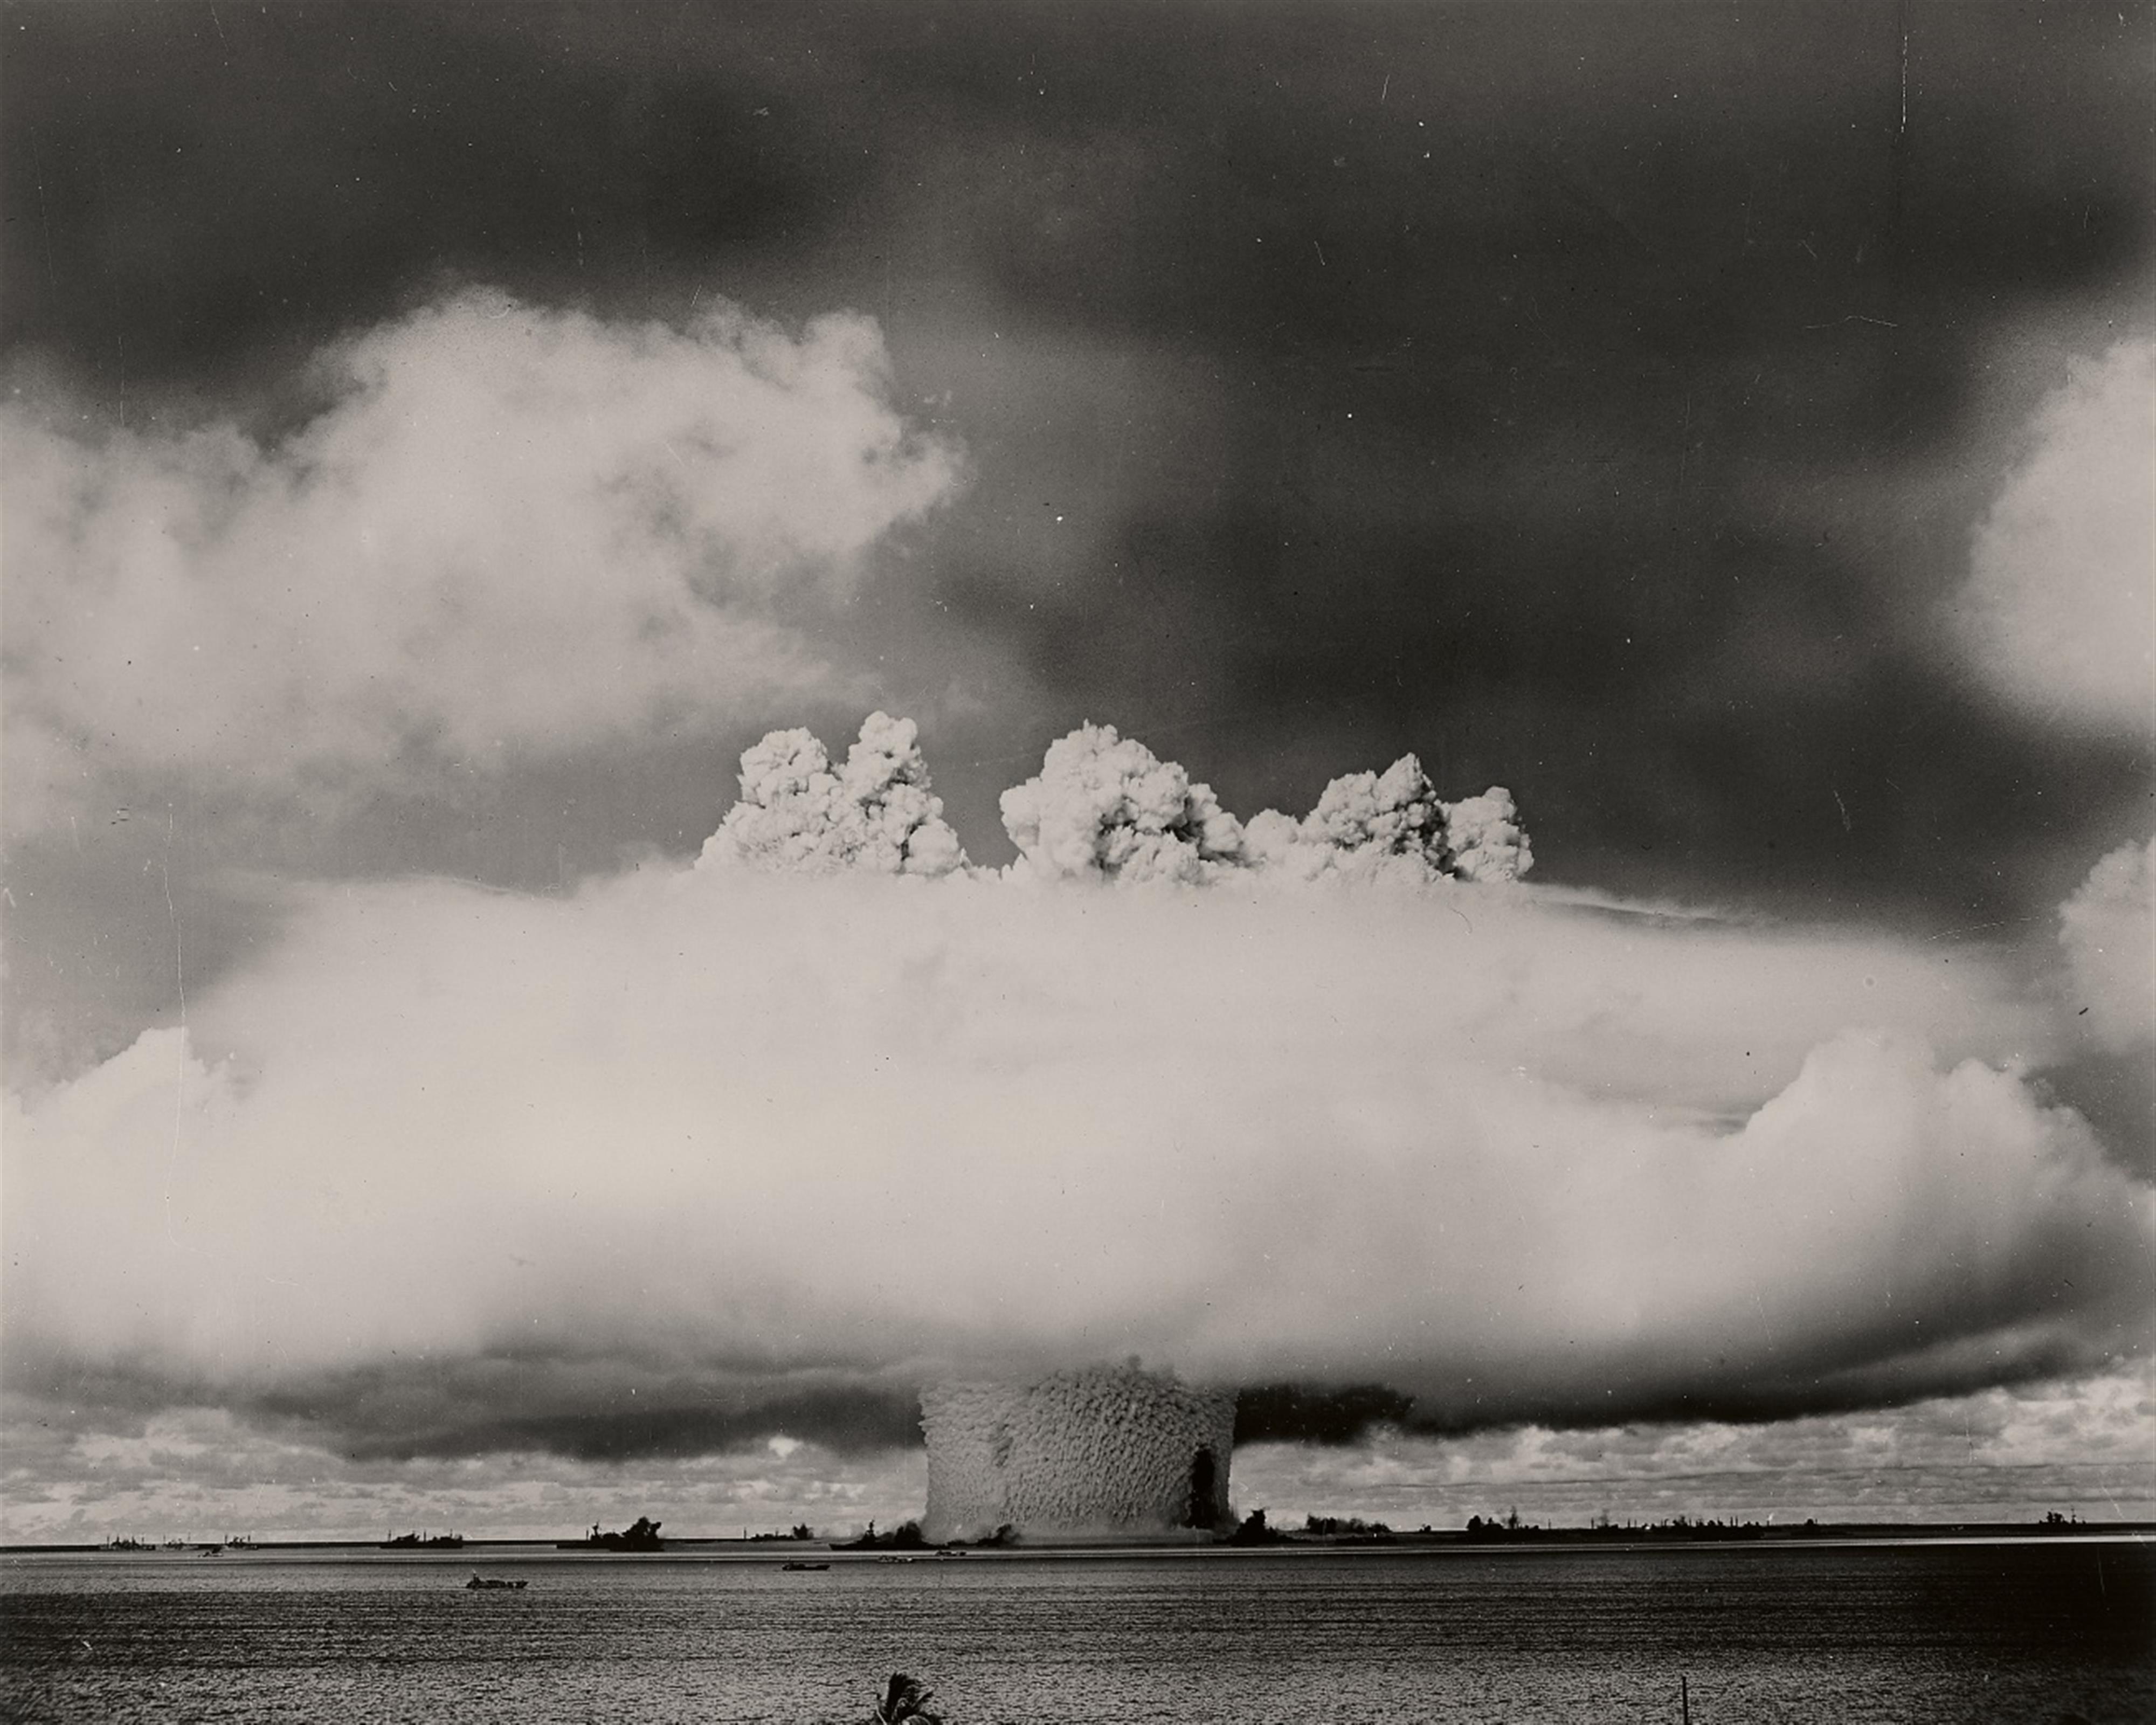 Joint Army Task Force One Photo - "Operation Crossroads" - Aufnahmen der Atombomben-Tests auf dem Bikini-Atoll - image-1